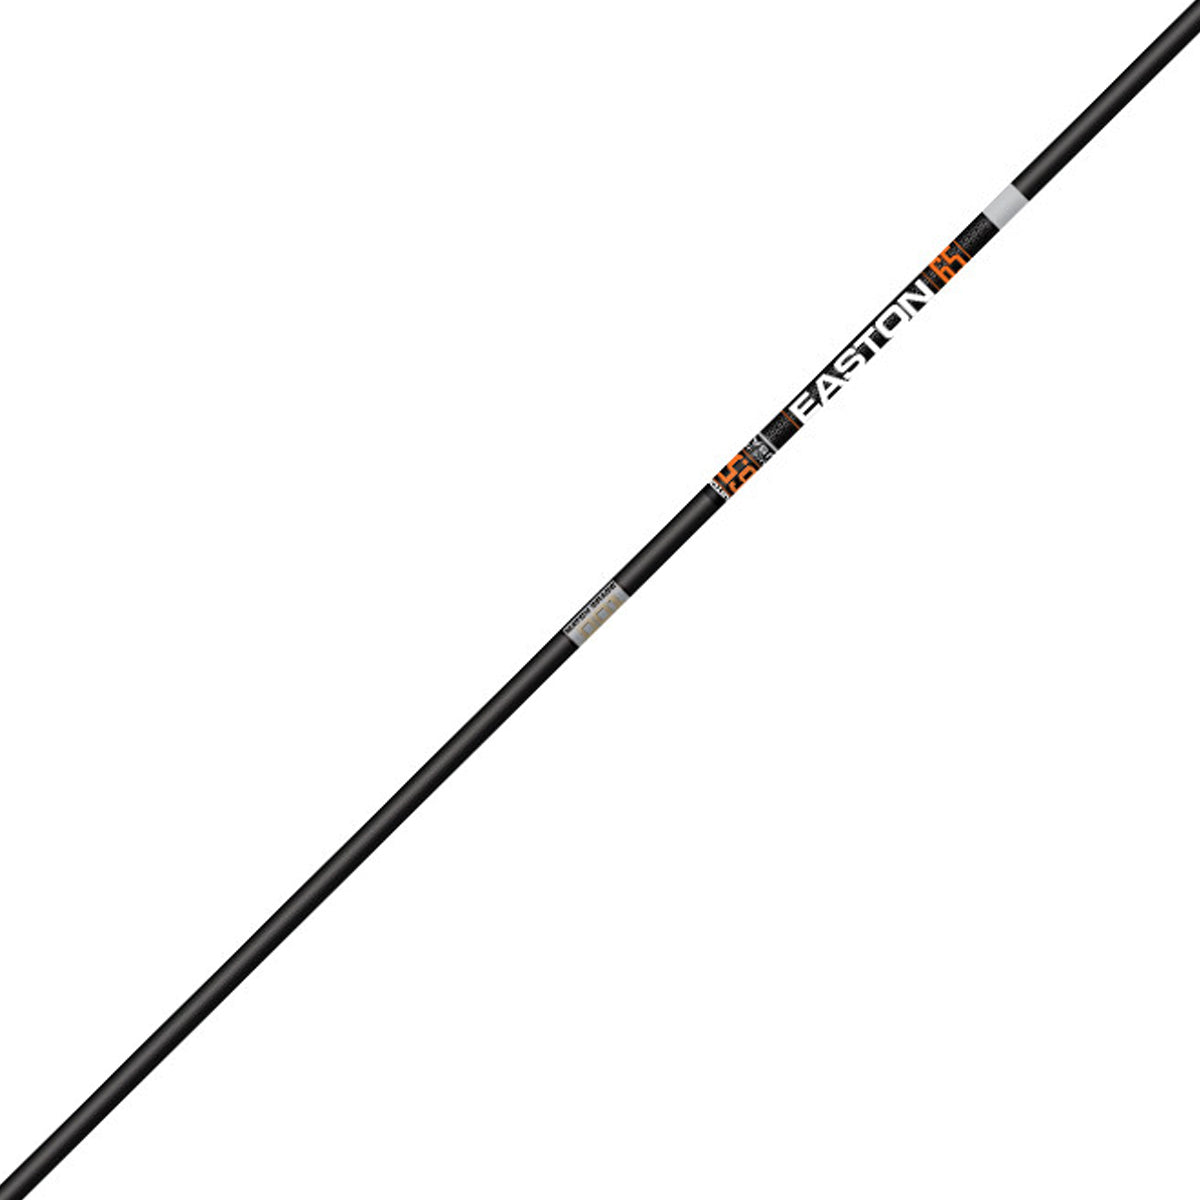 Easton 6.5mm ACU Match Grade Arrow Shafts - 12 Count in Easton 6.5mm Match Grade Arrow Shafts - 12 Count by Easton | Archery - goHUNT Shop by GOHUNT | Easton - GOHUNT Shop